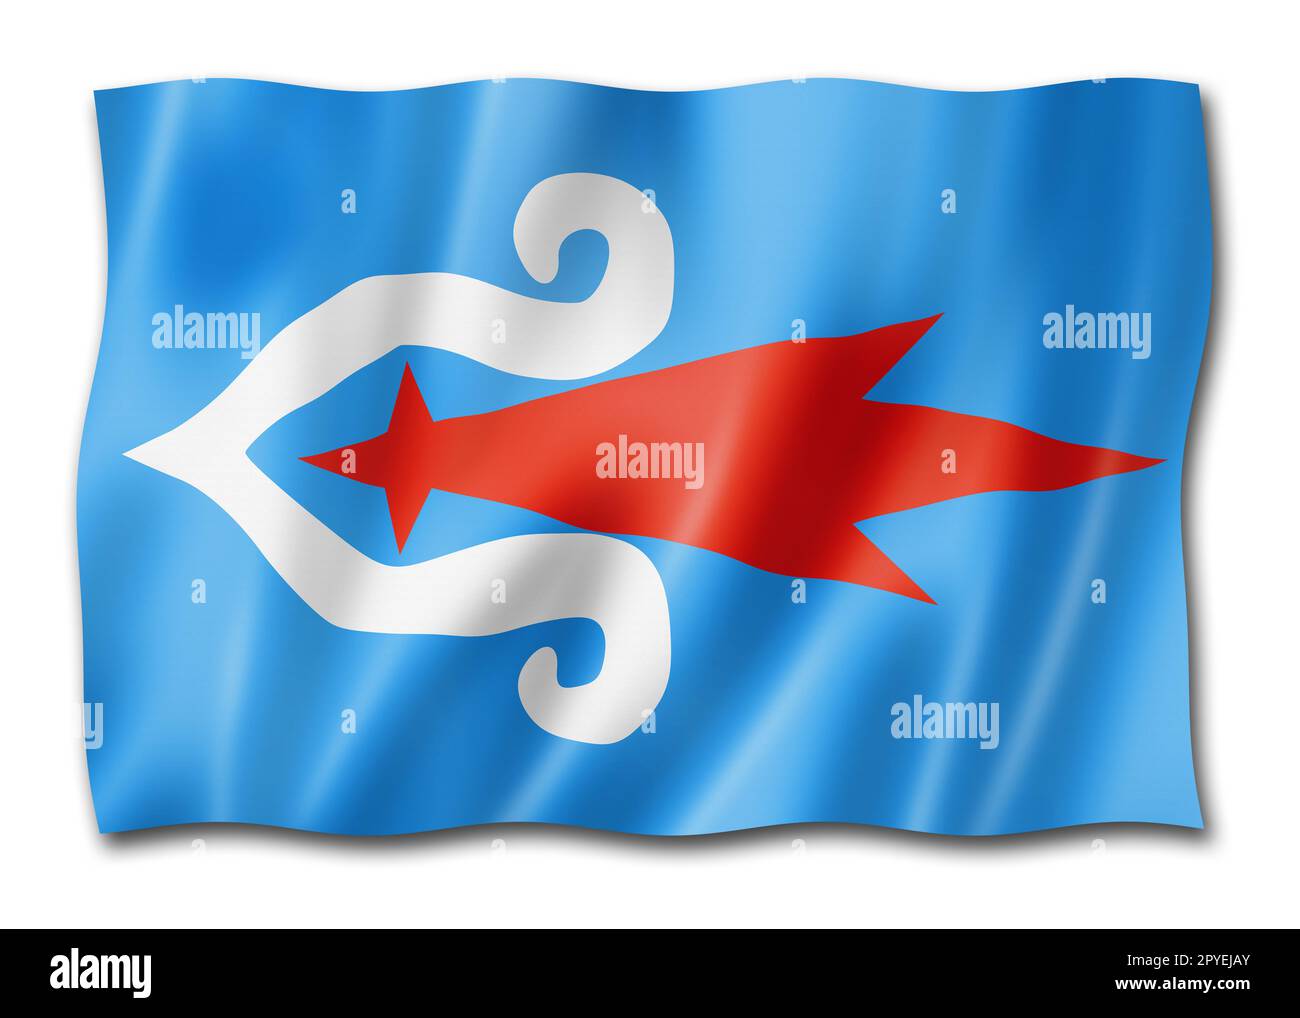 Ainu people ethnic flag, Asia. 3D illustration Stock Photo